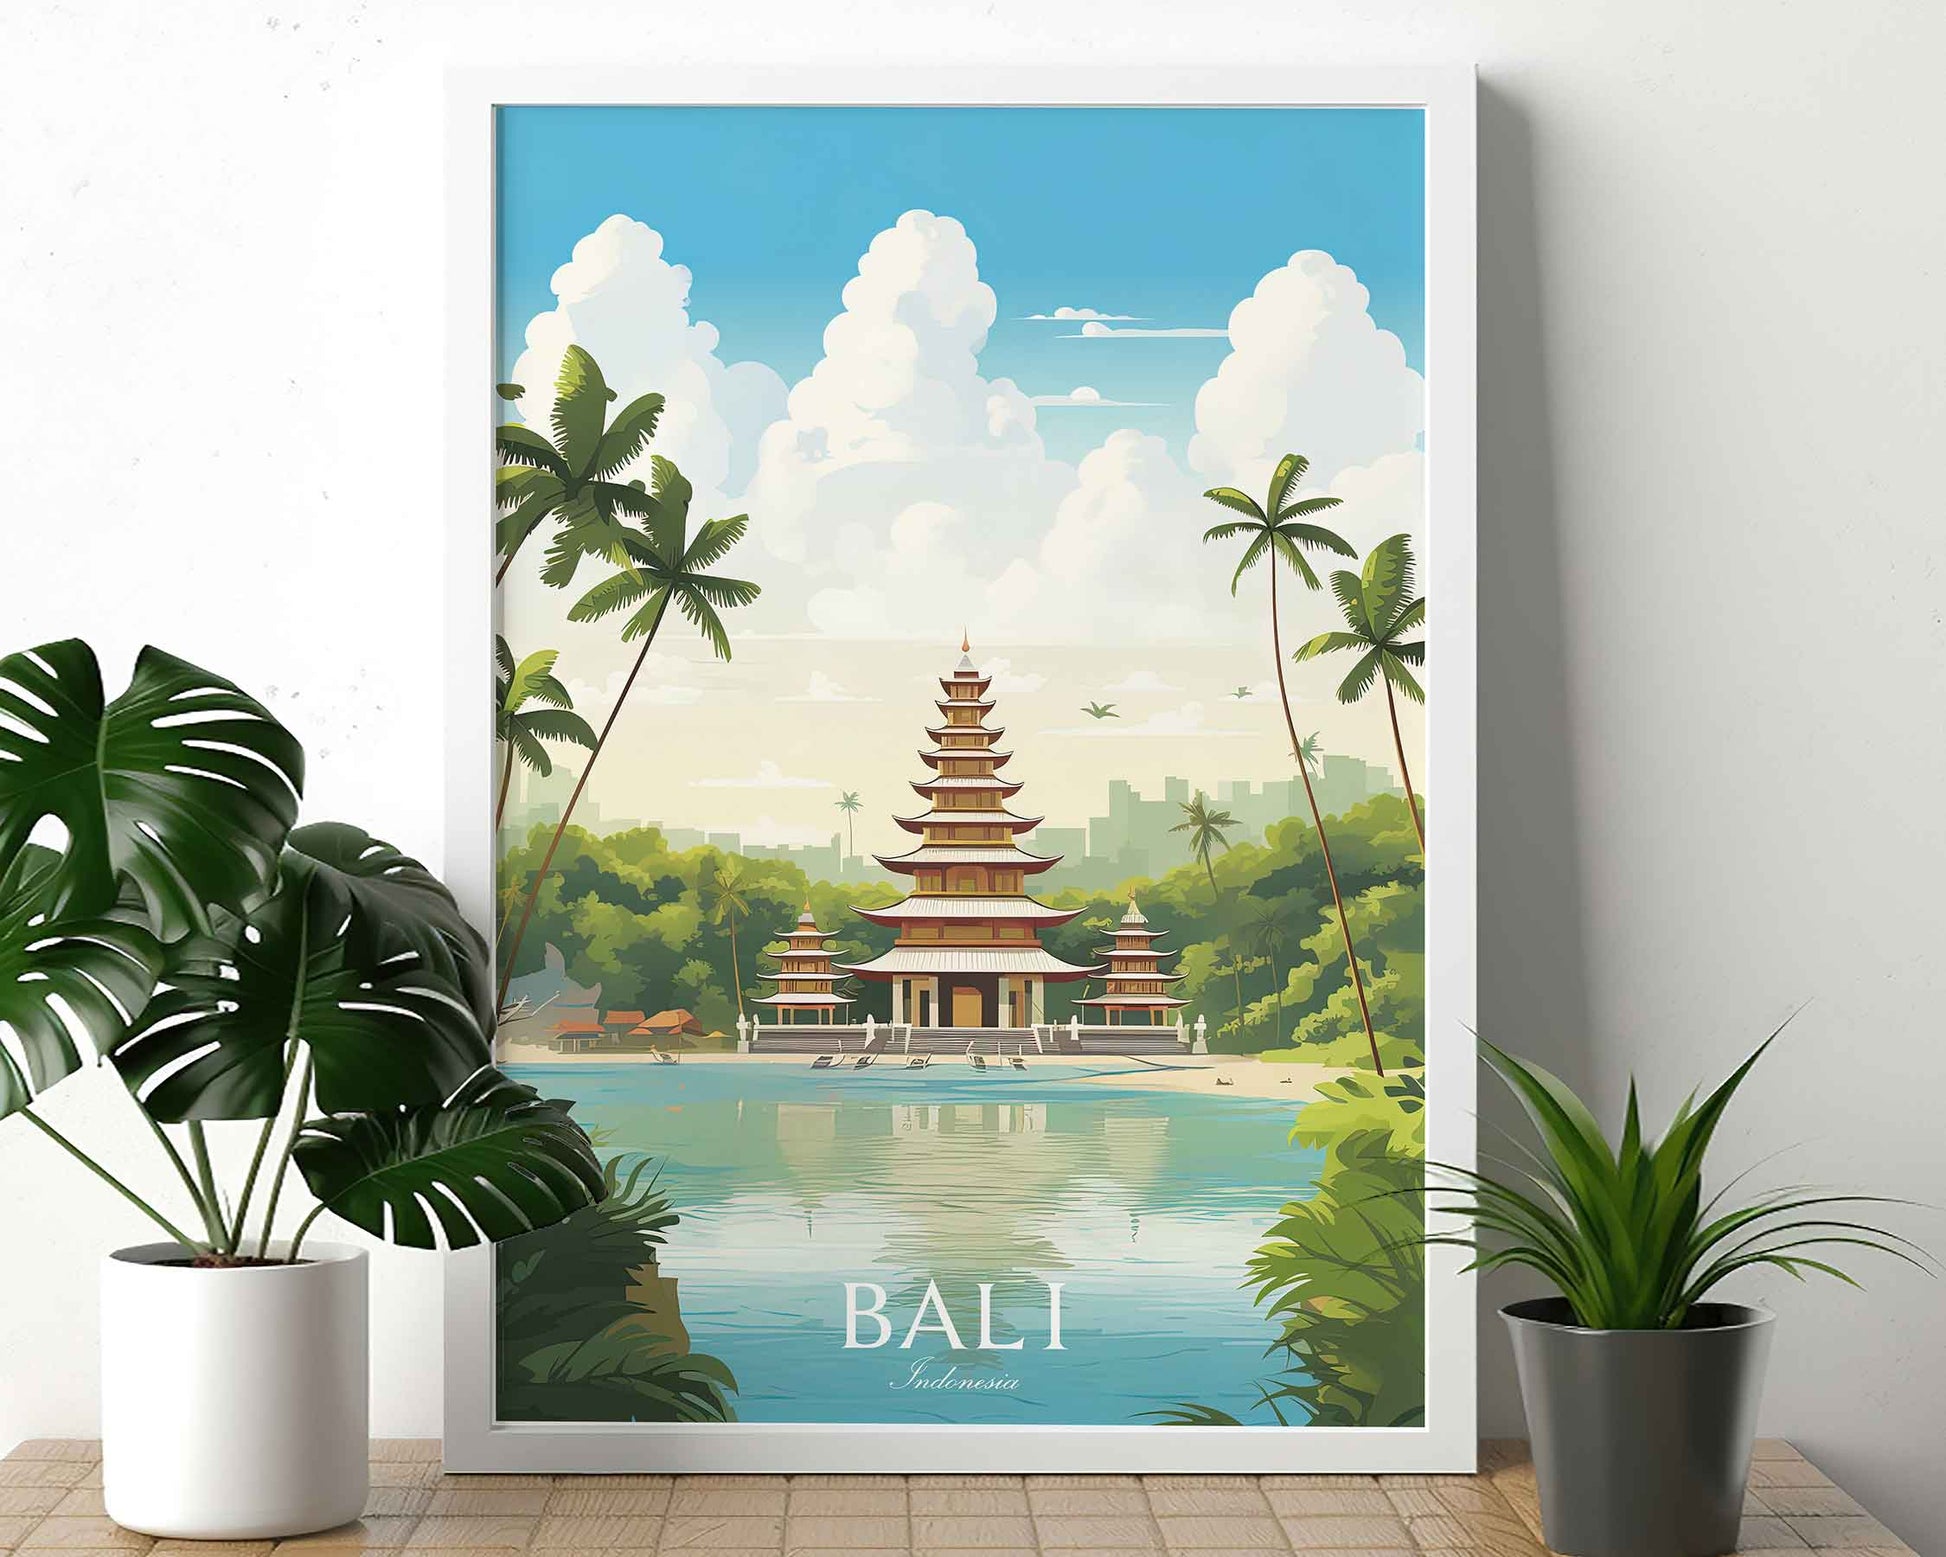 Framed Image of Bali Indonesia Wall Art Travel Poster Prints Illustration